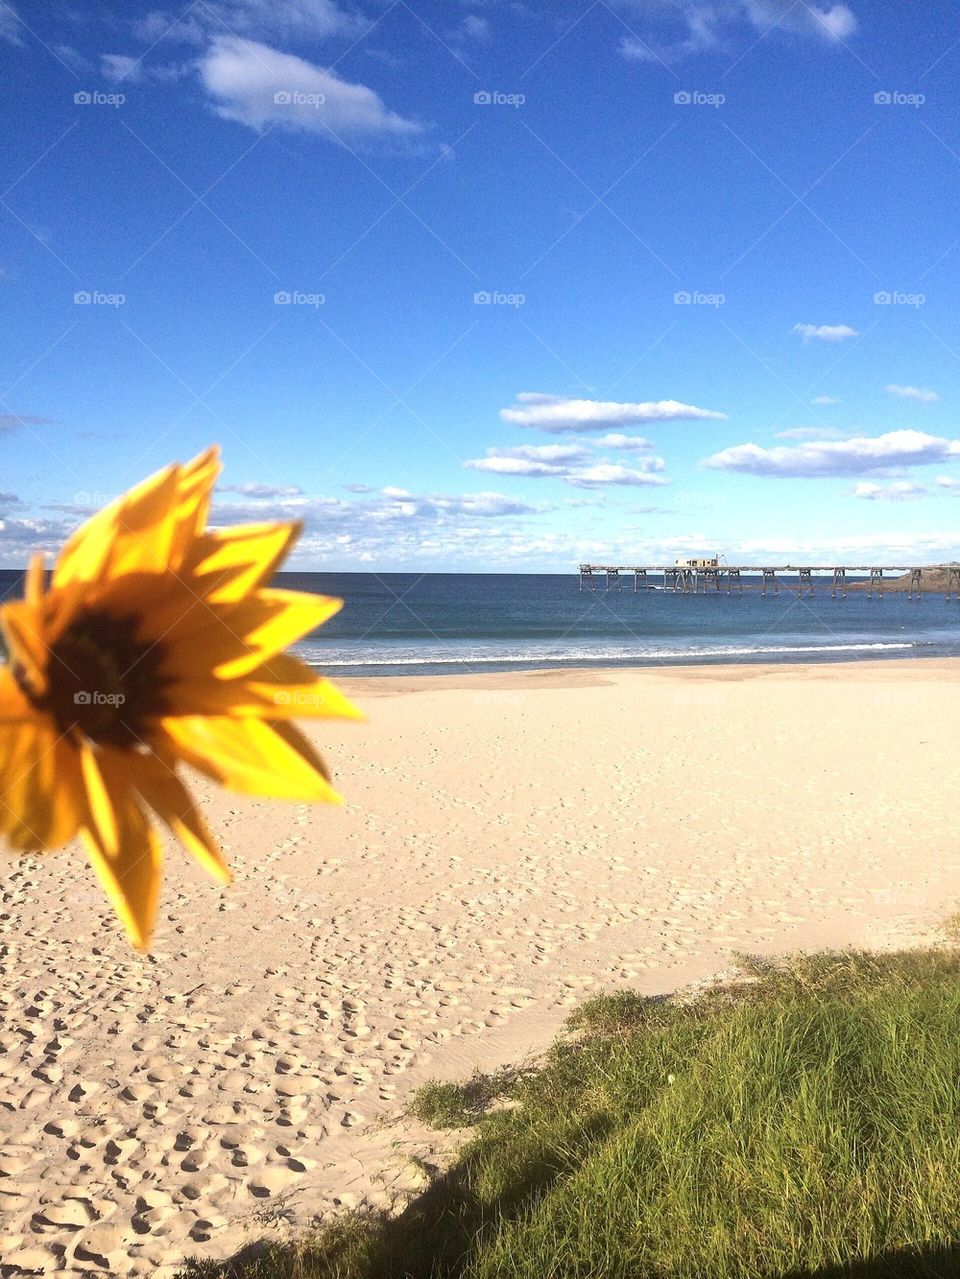 Flower beach view